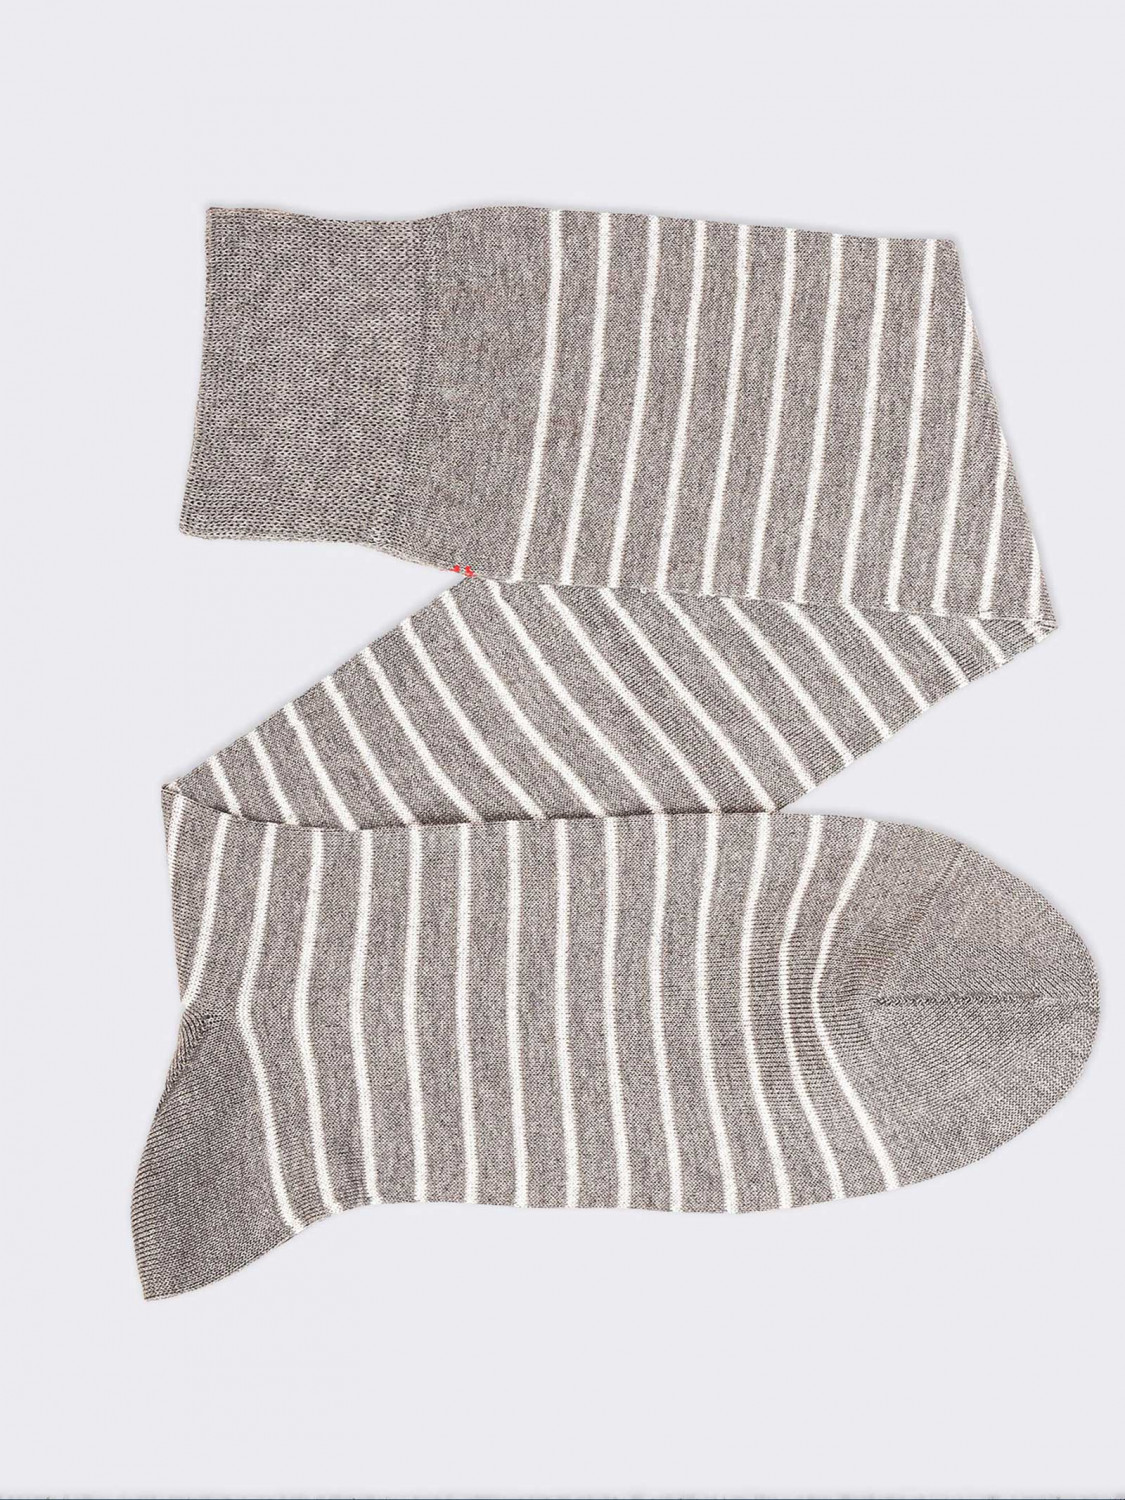 Rows pattern Men's Knee High Socks